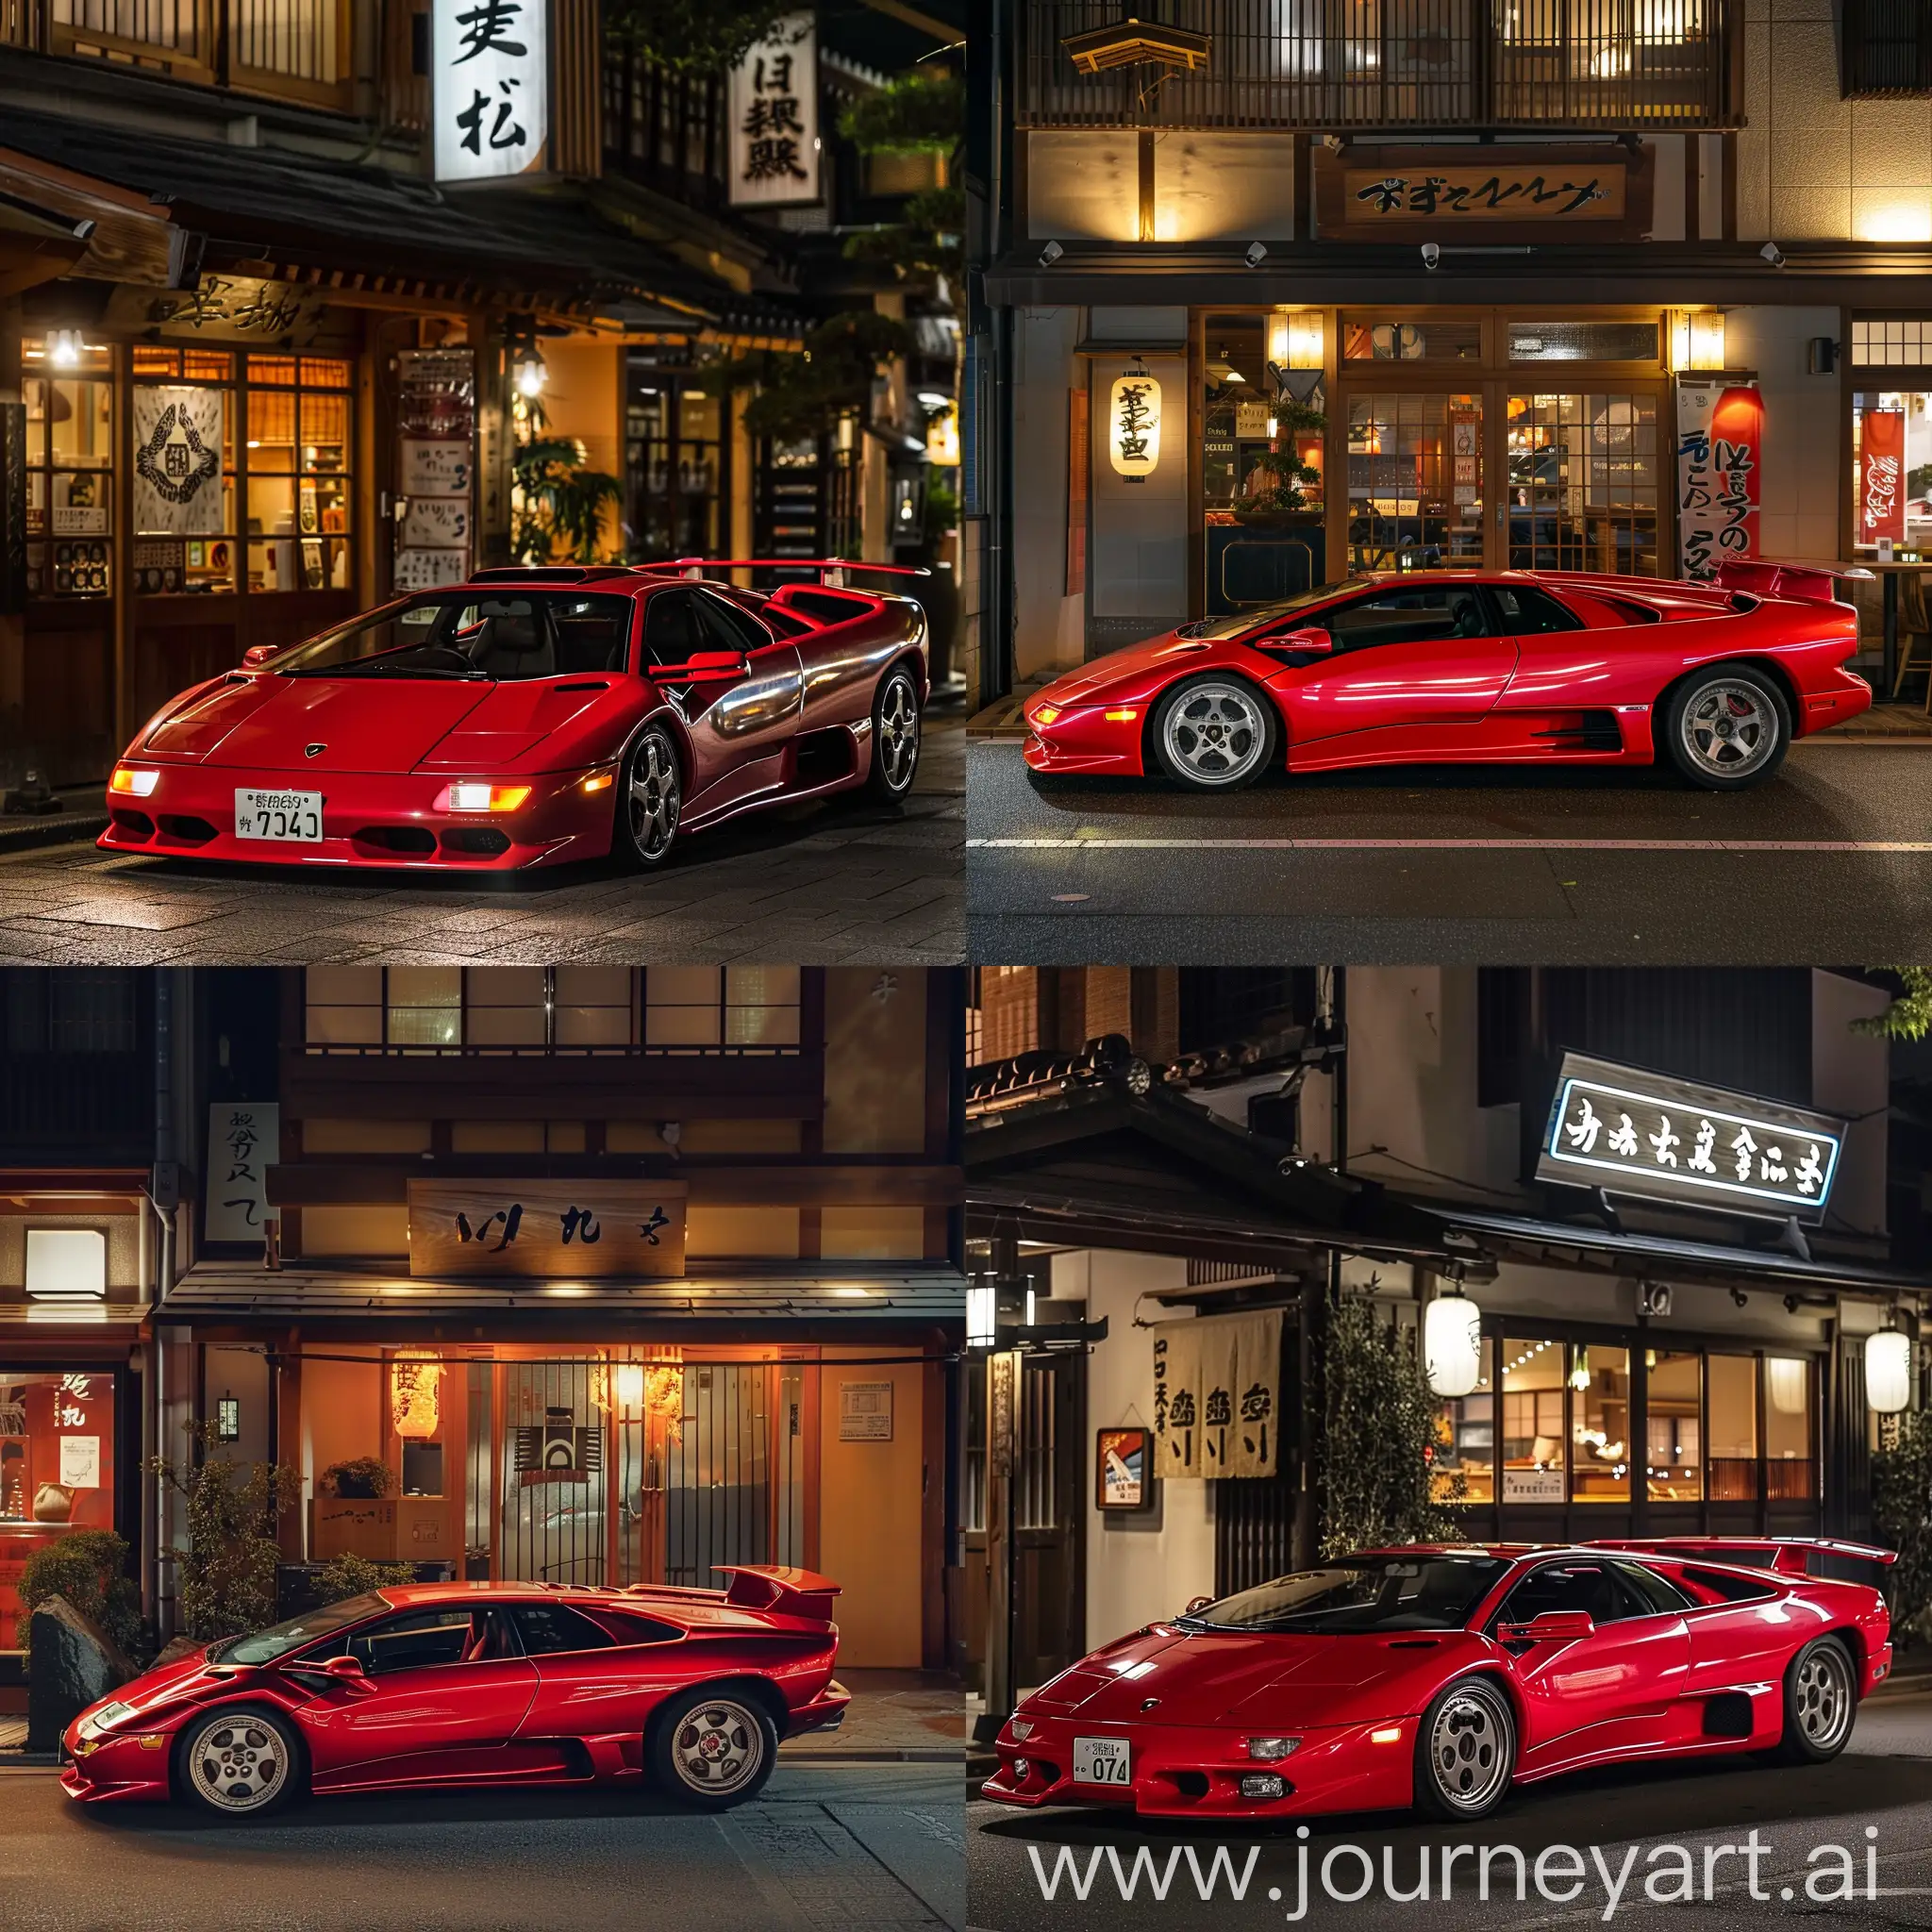 Sleek-Red-Lamborghini-Diablo-Parked-Outside-Japanese-Restaurant-at-Night